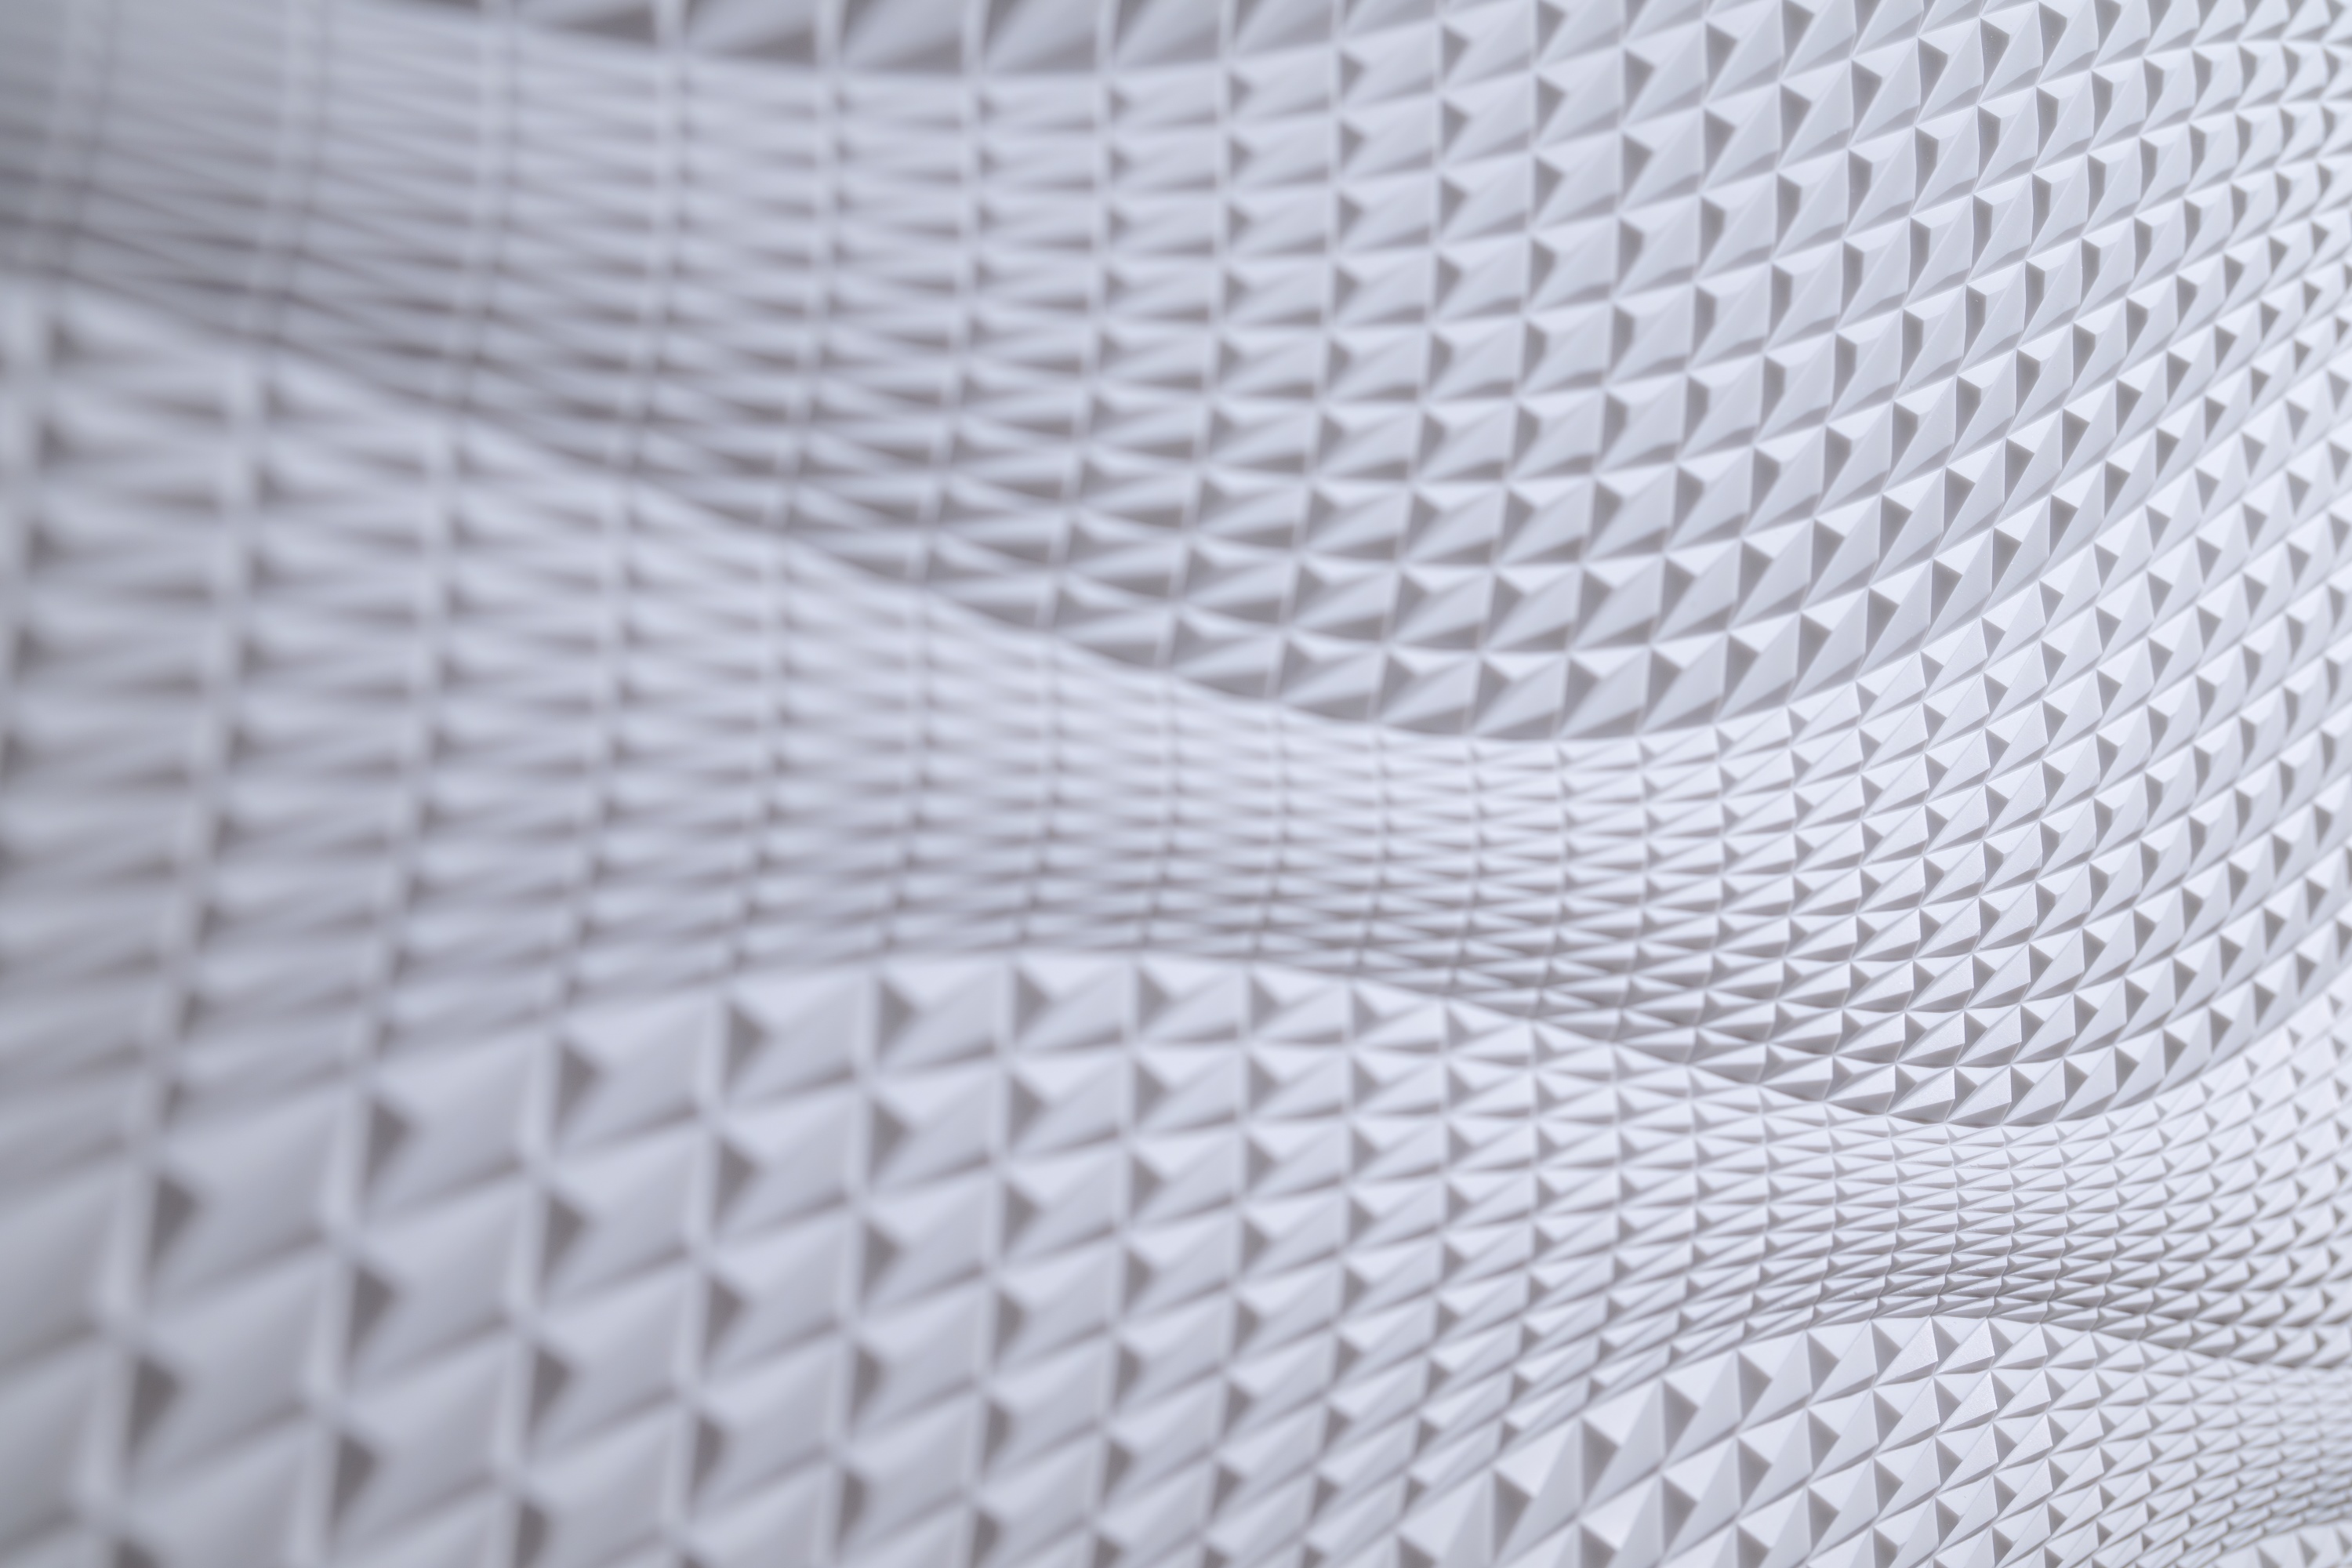 3D-structuuur van patternine in solid surface van Durasein®